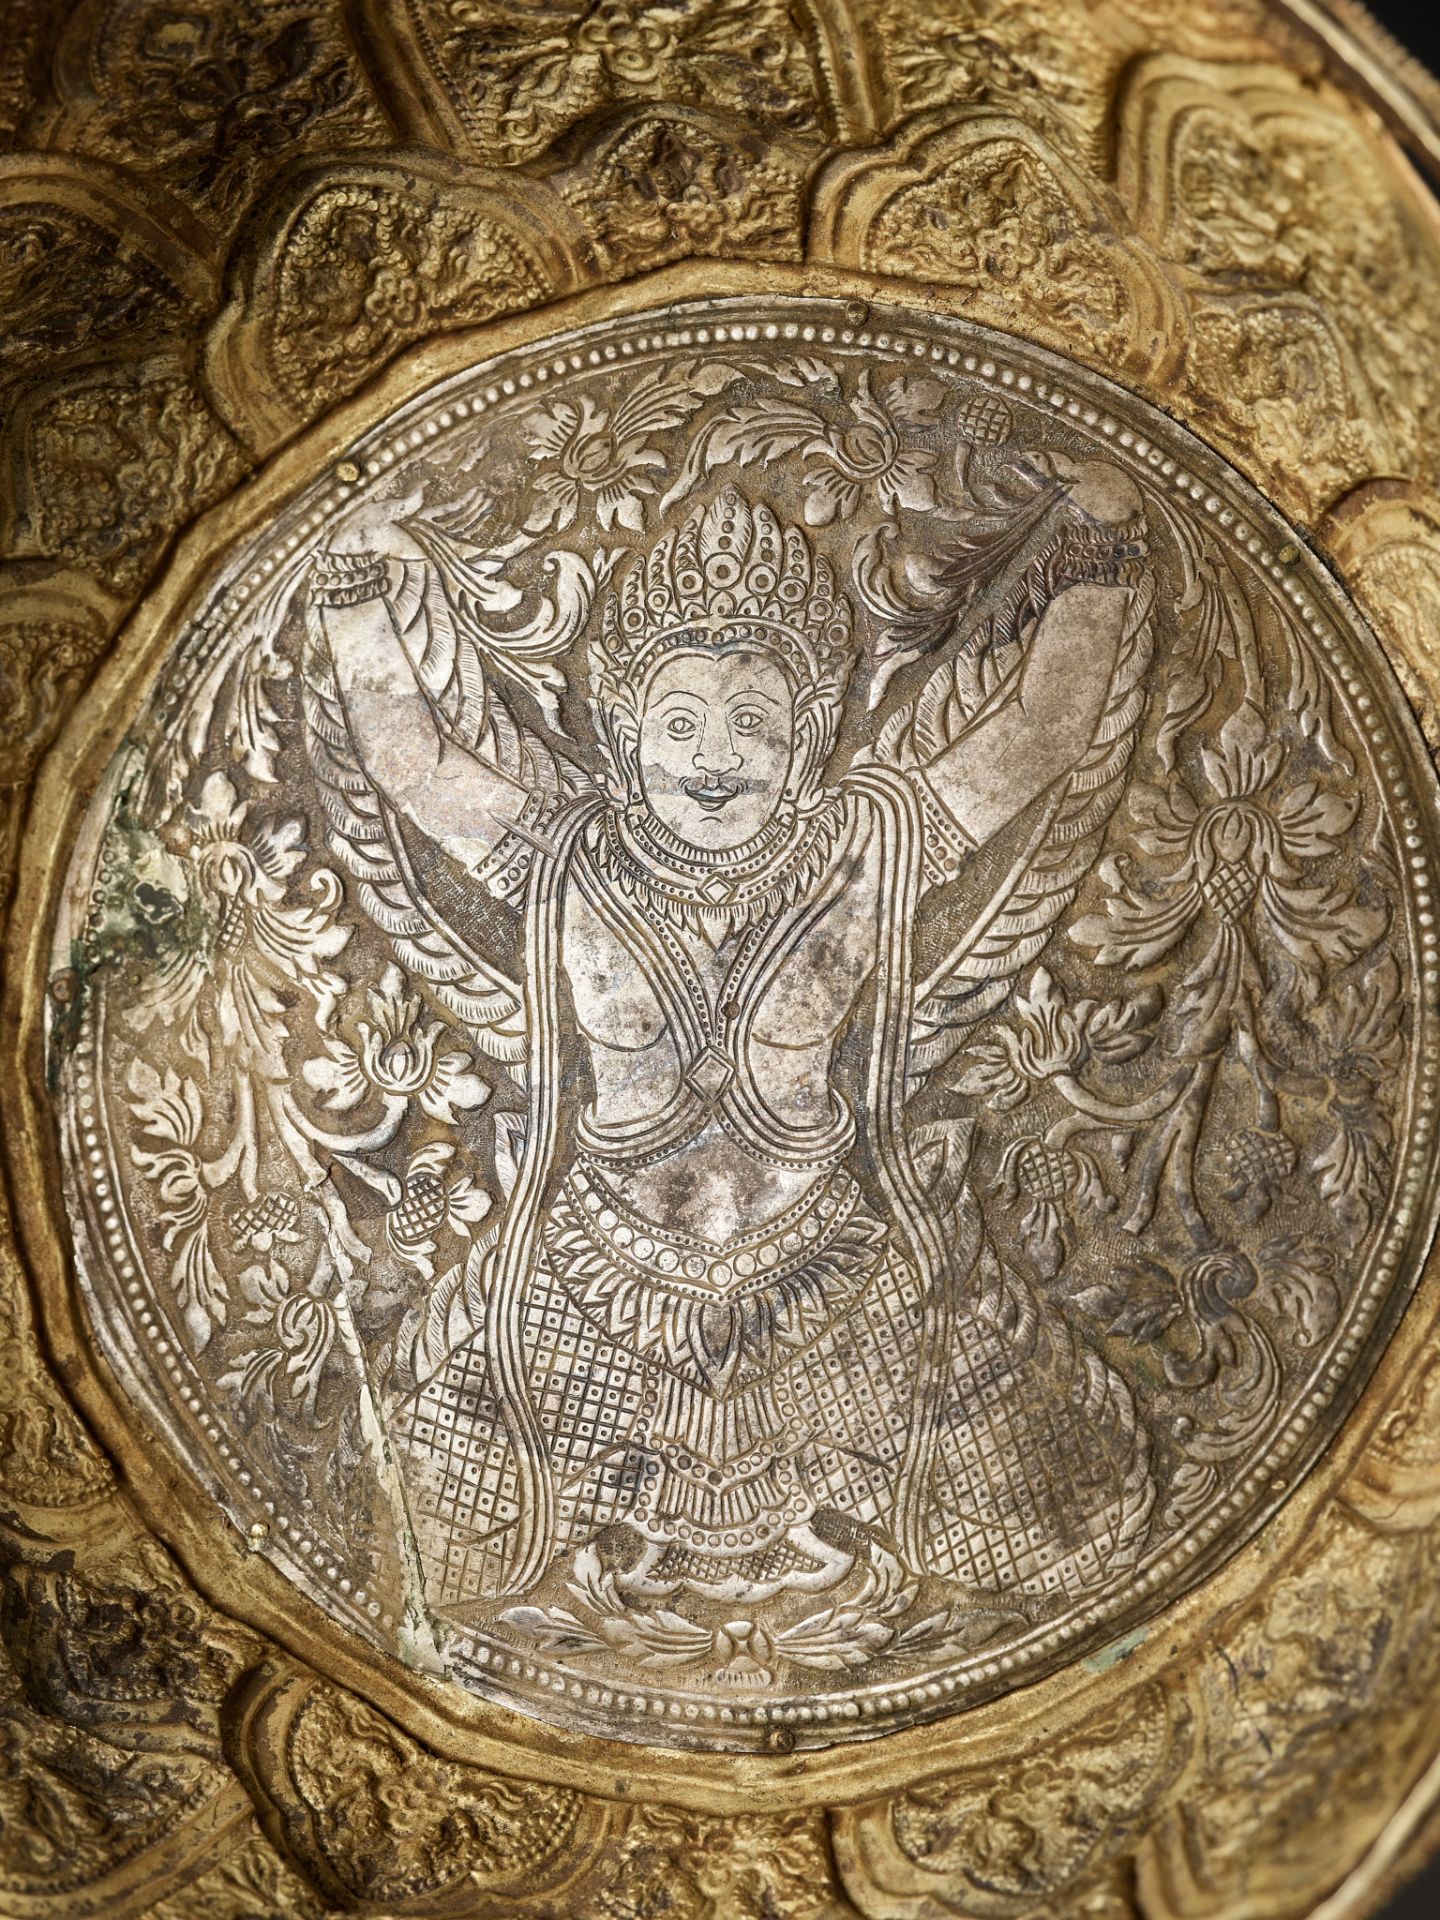 A SILVER-INLAID GOLD REPOUSSÉ BOWL DEPICTING GARUDA, VIETNAM,FORMER KINGDOMS OF CHAMPA,CIRCA 10TH C. - Image 6 of 18